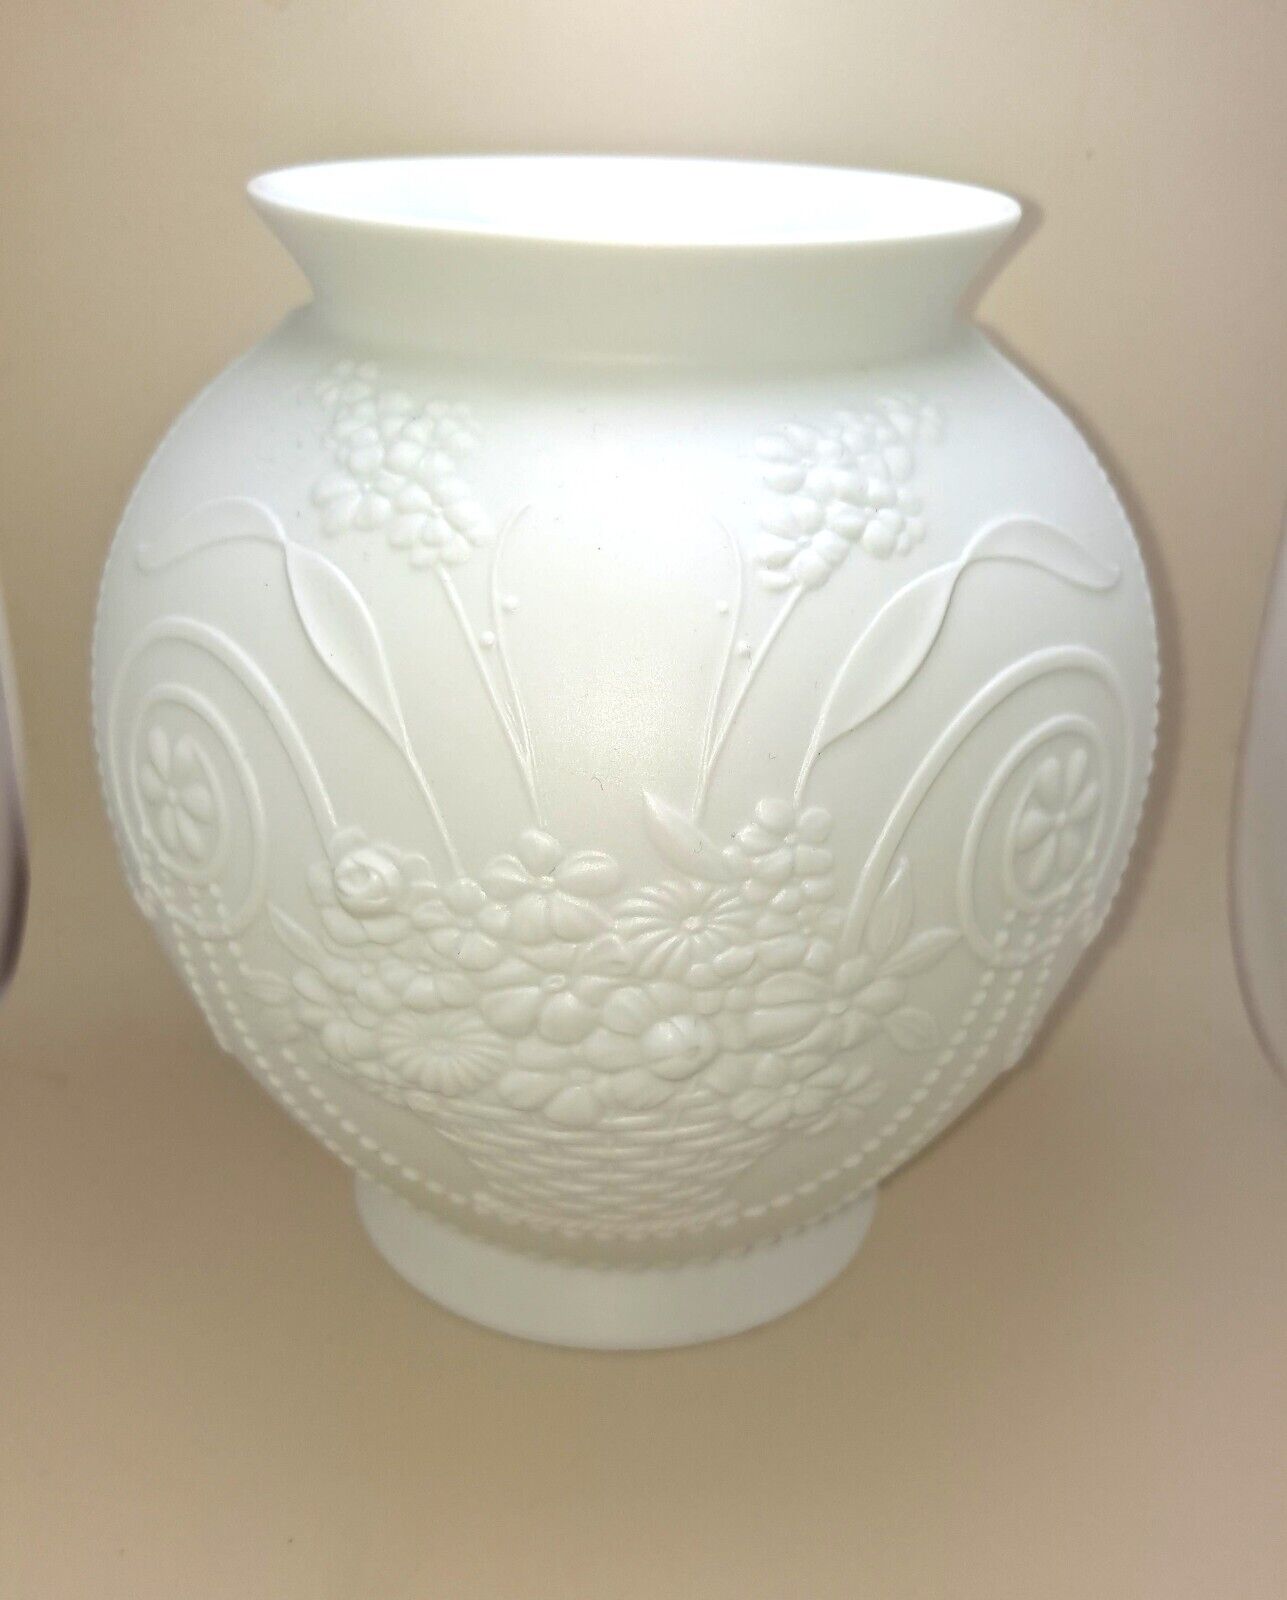 Manfred Frey AK Kaiser Floral Vase White Bisque Porcelain #0247 Germany